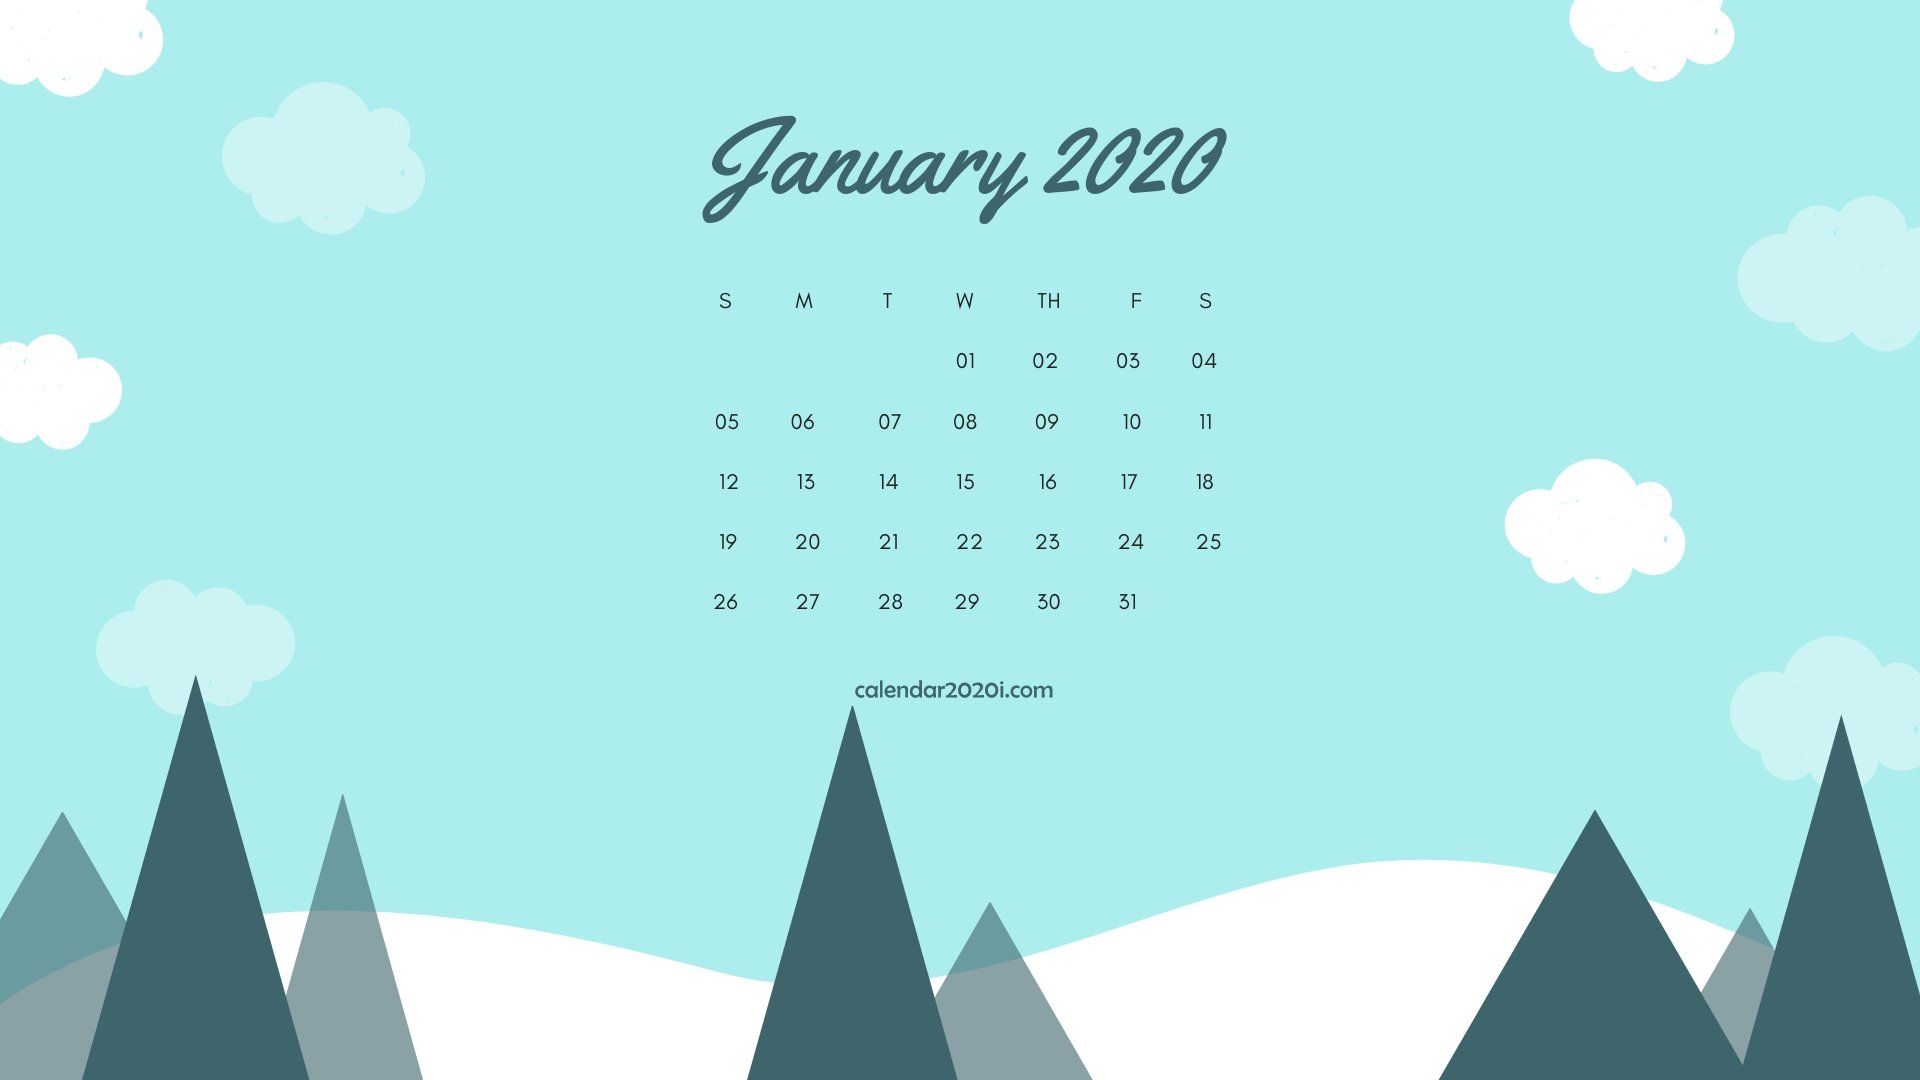 January 2020 Calendar Wallpapers   Top Free January 2020 Calendar